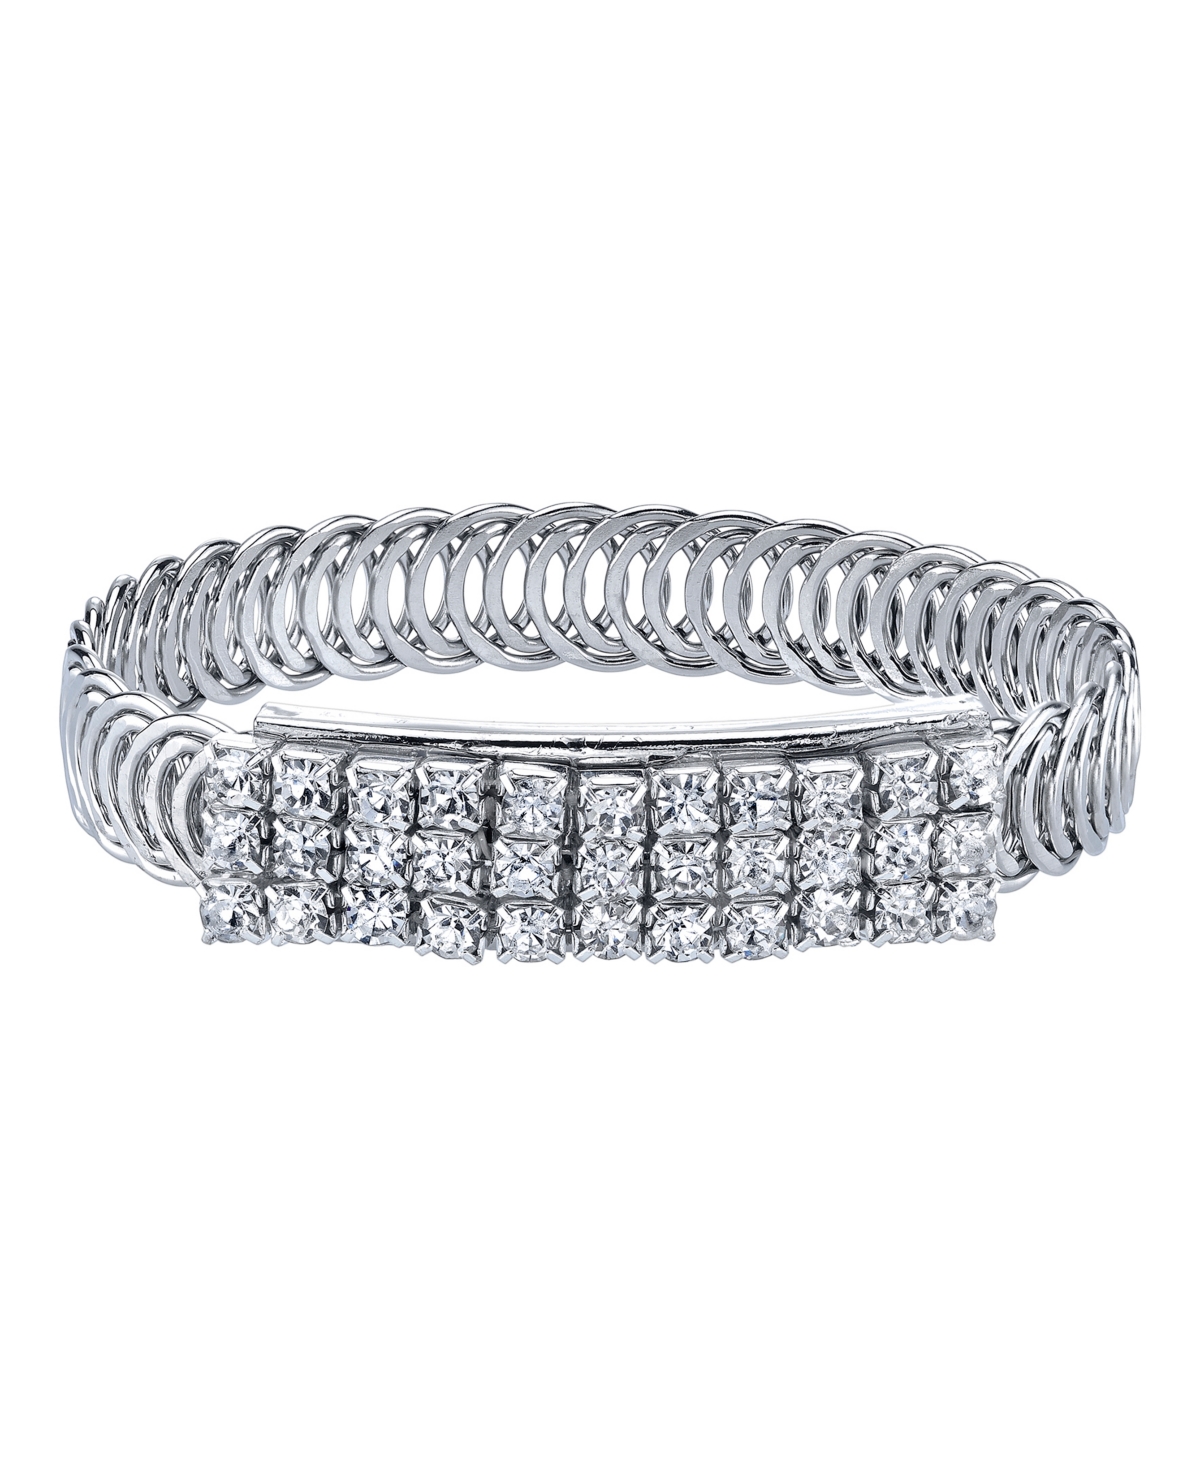 Silver-Tone Clear Crystal Rhinestone Slim Belt Bracelet - White